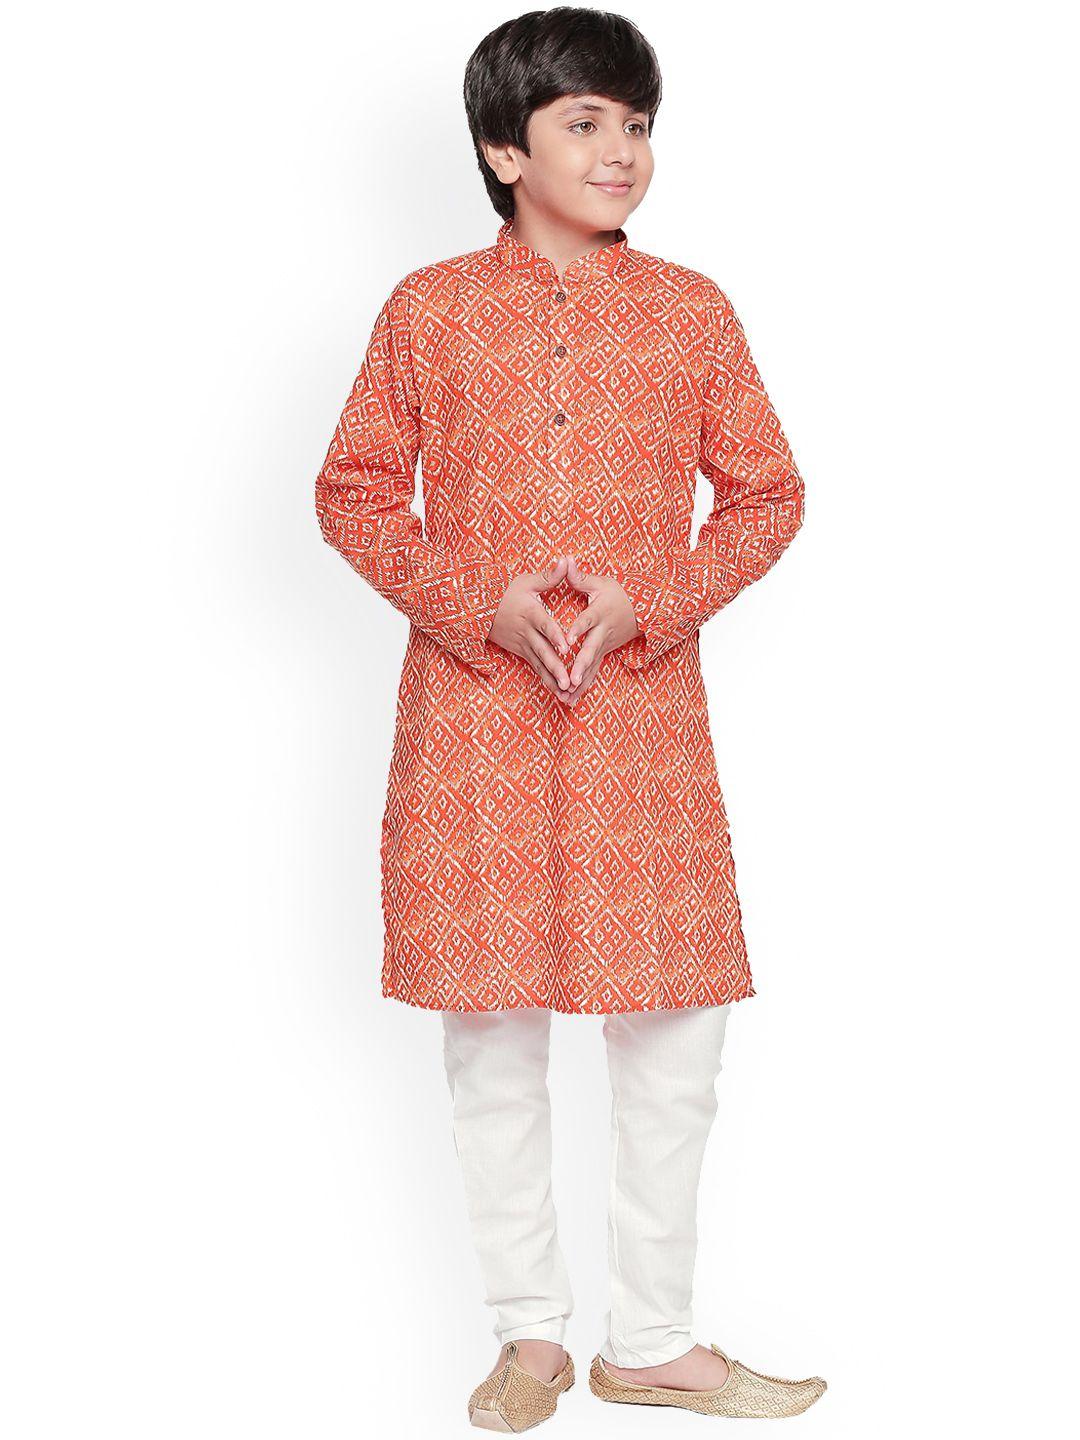 jeetethnics boys orange & white ethnic motifs printed regular kurta with pyjamas